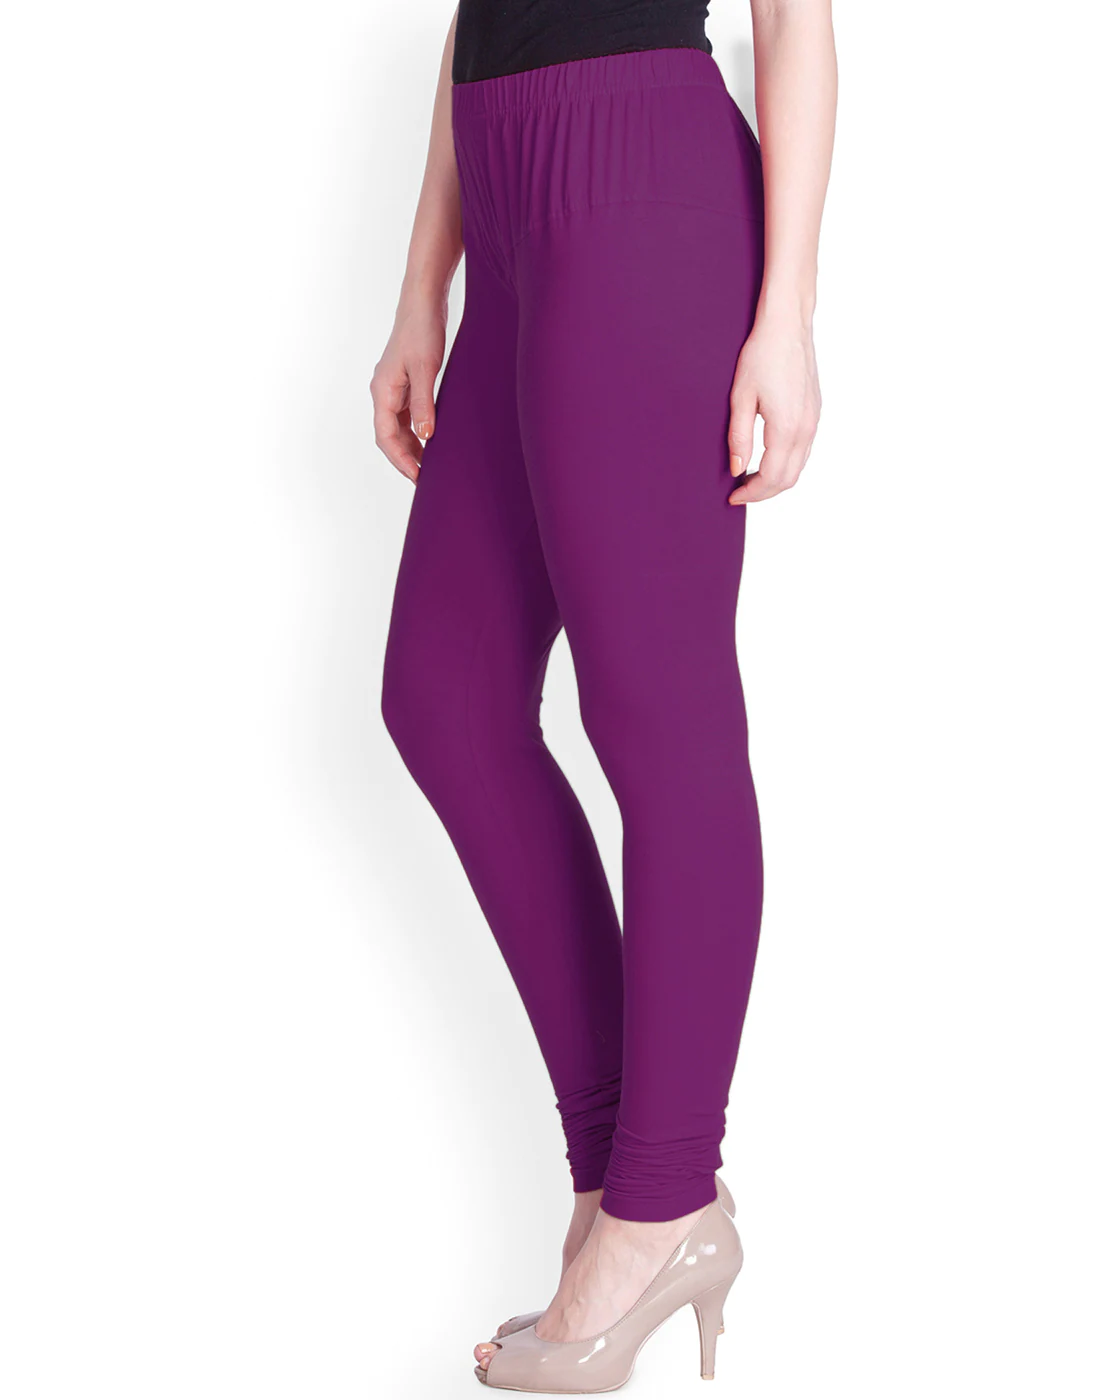 Lyra Purple Churidar Cotton Leggings free Size for Woman - Stilento